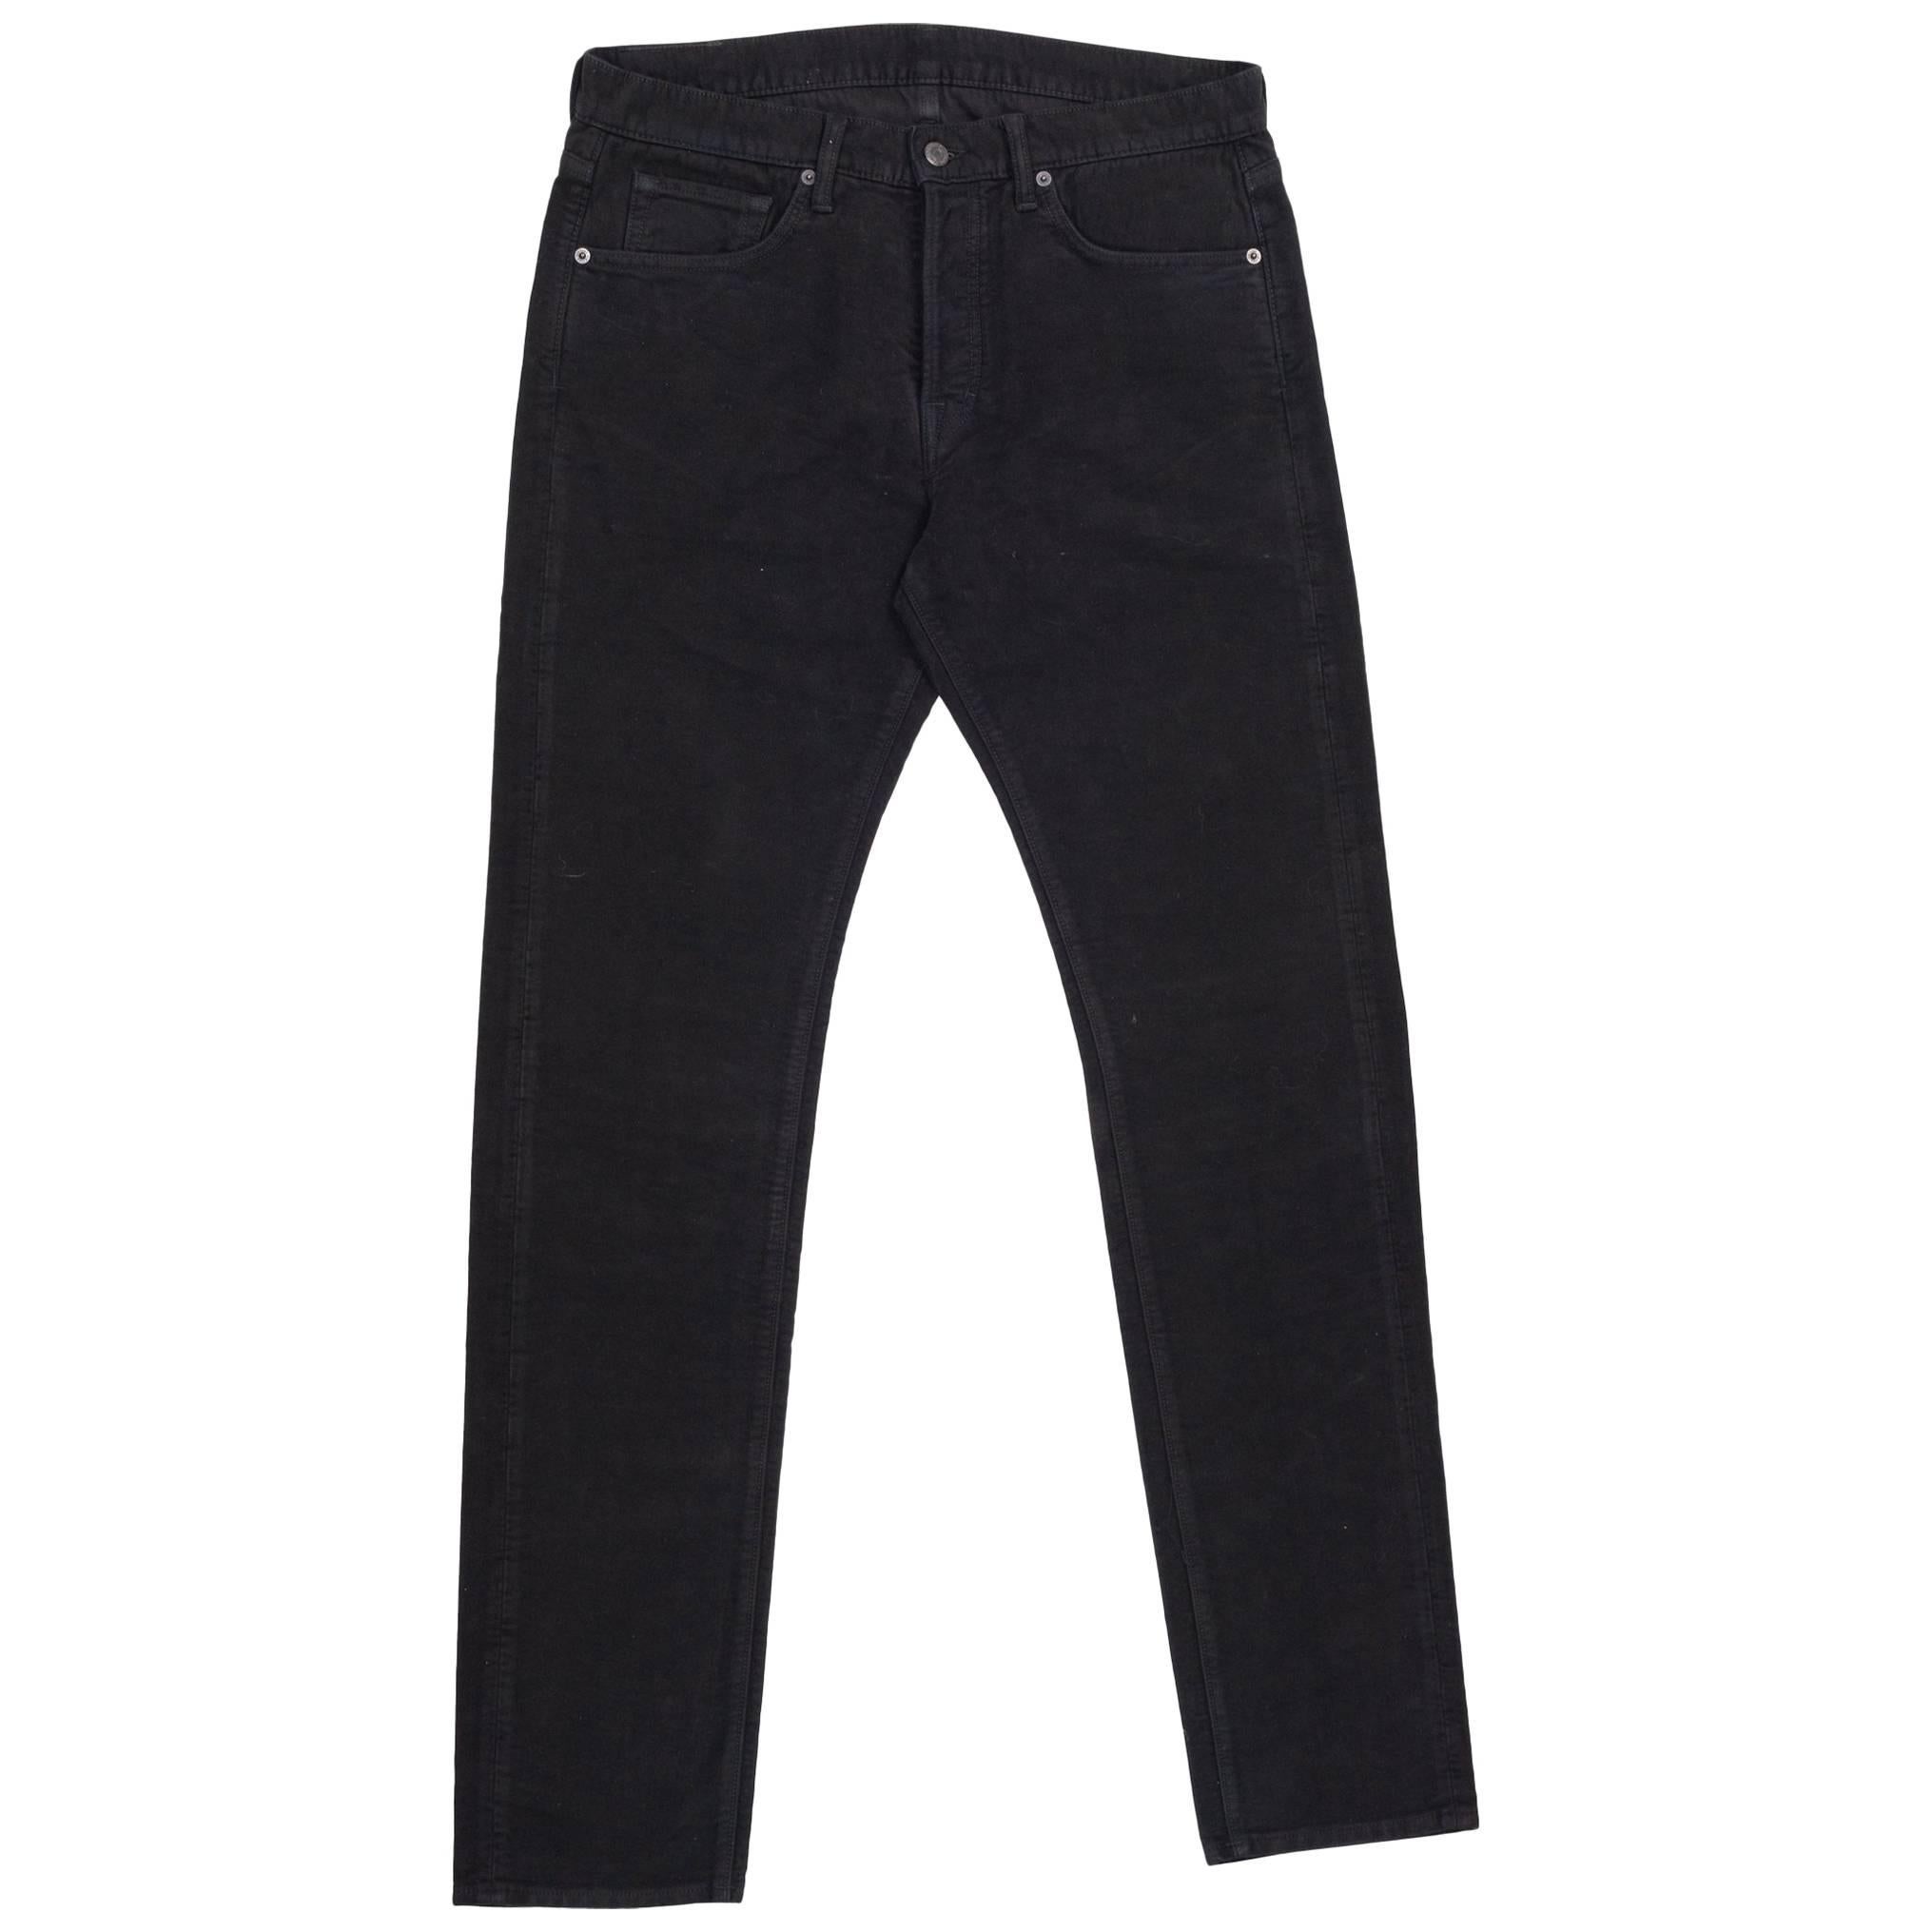 Tom Ford Black Velvet Cotton Denim Jeans Size 34 Slim Fit Model For Sale